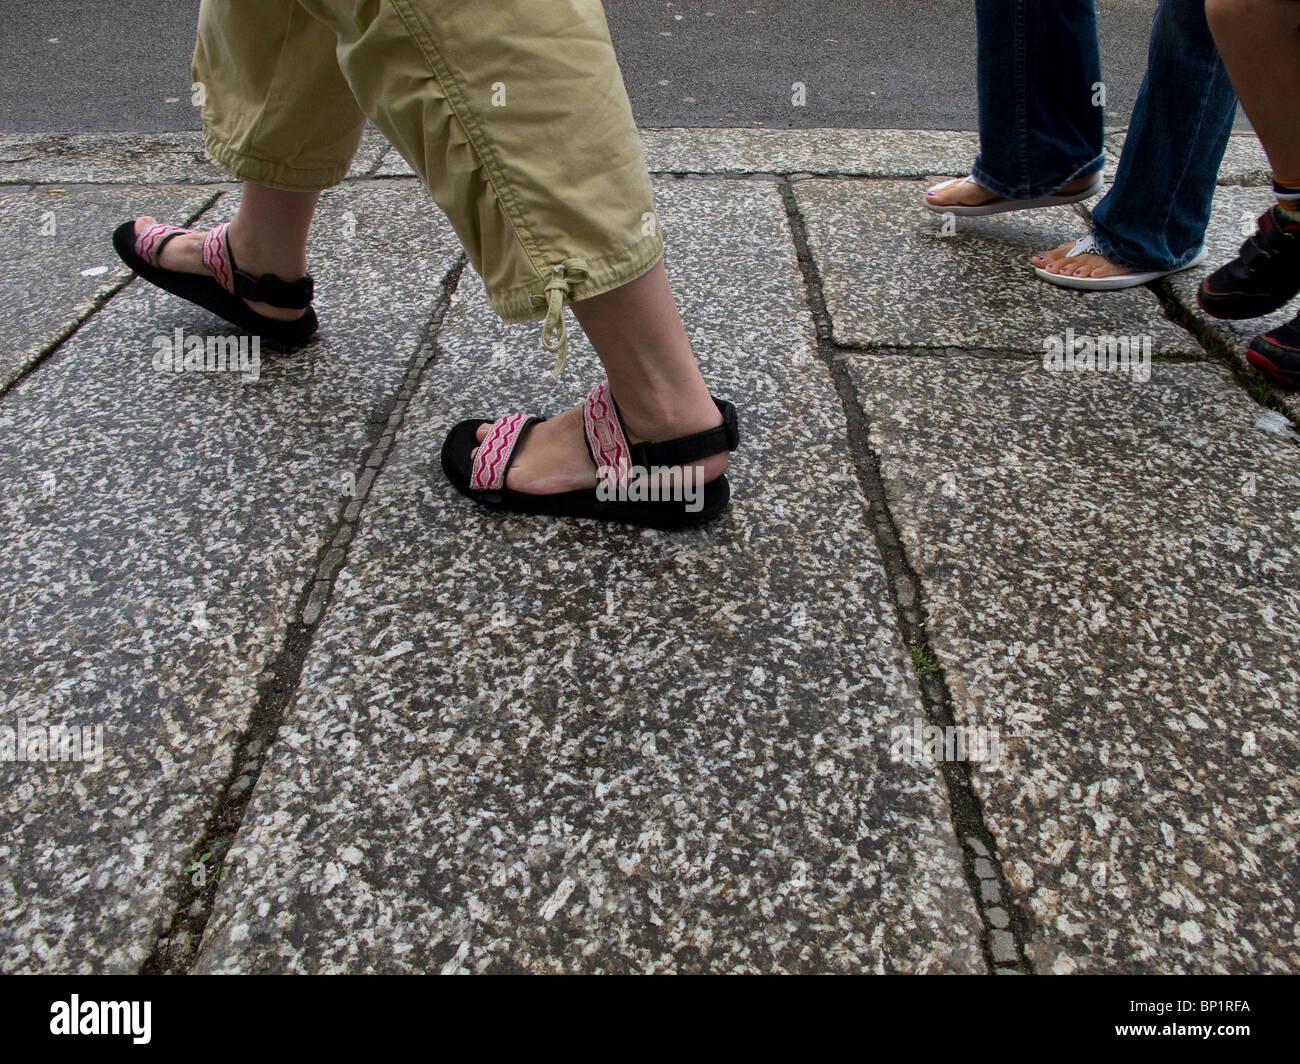 People walking on a pavement. Stock Photo